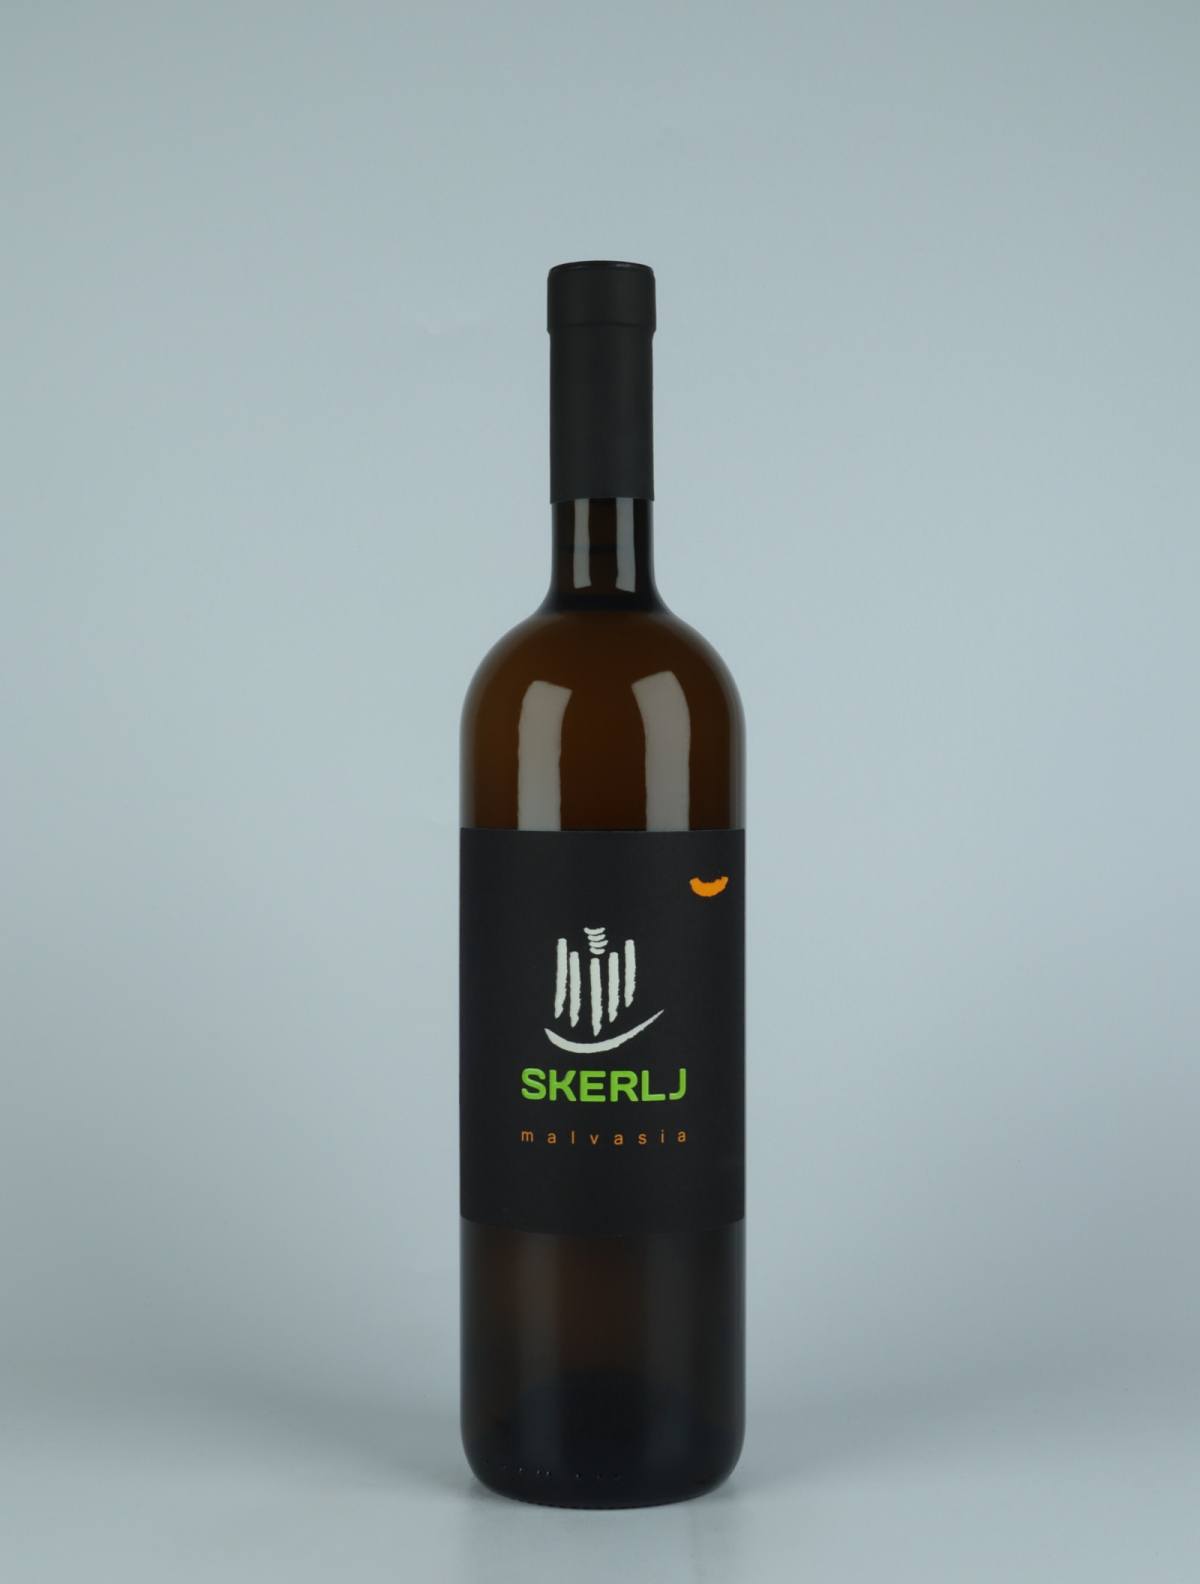 A bottle 2020 Malvasia Orange wine from Skerlj, Friuli in Italy